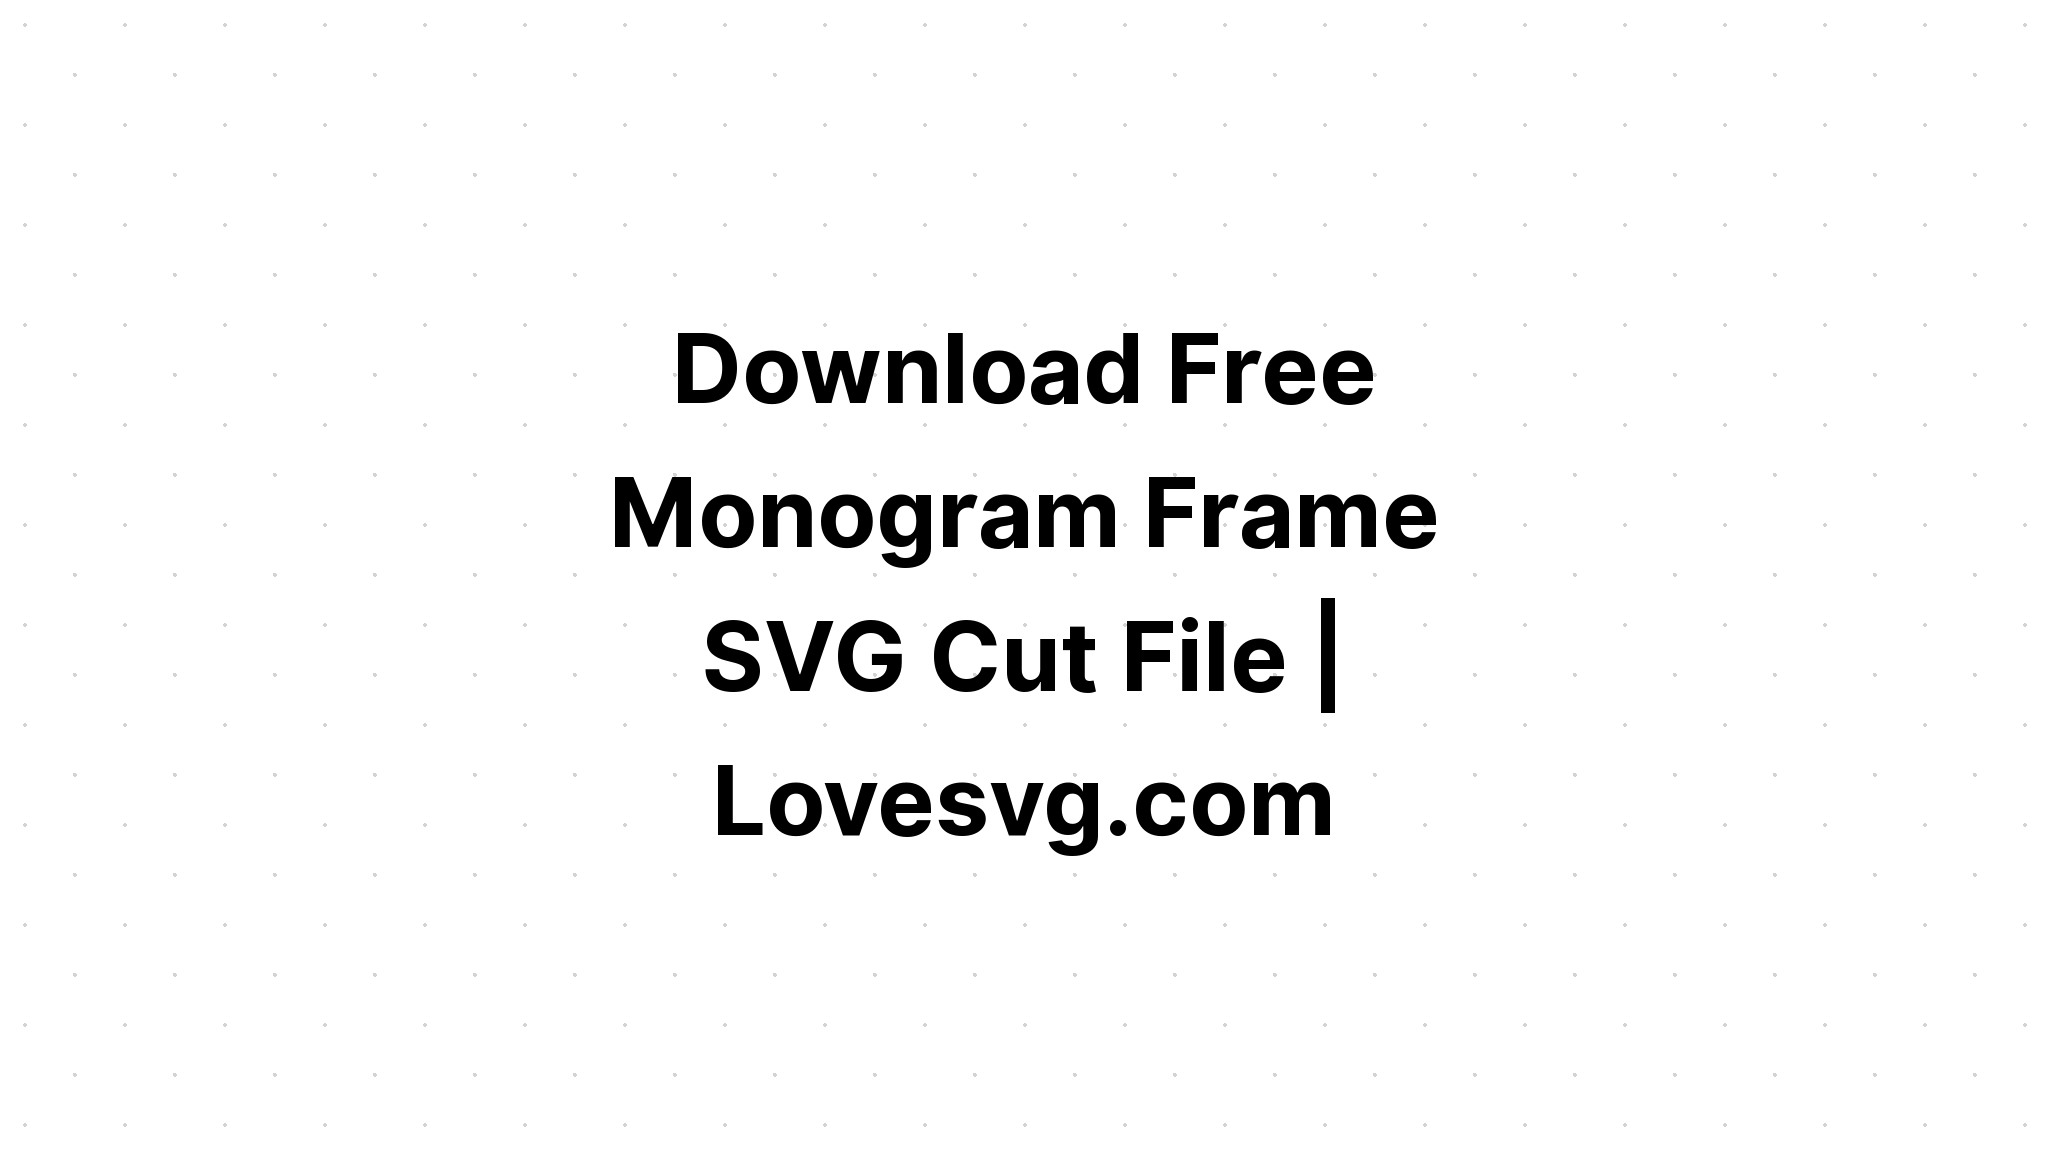 Download Free Svg Monogram Cut Files - Layered SVG Cut File